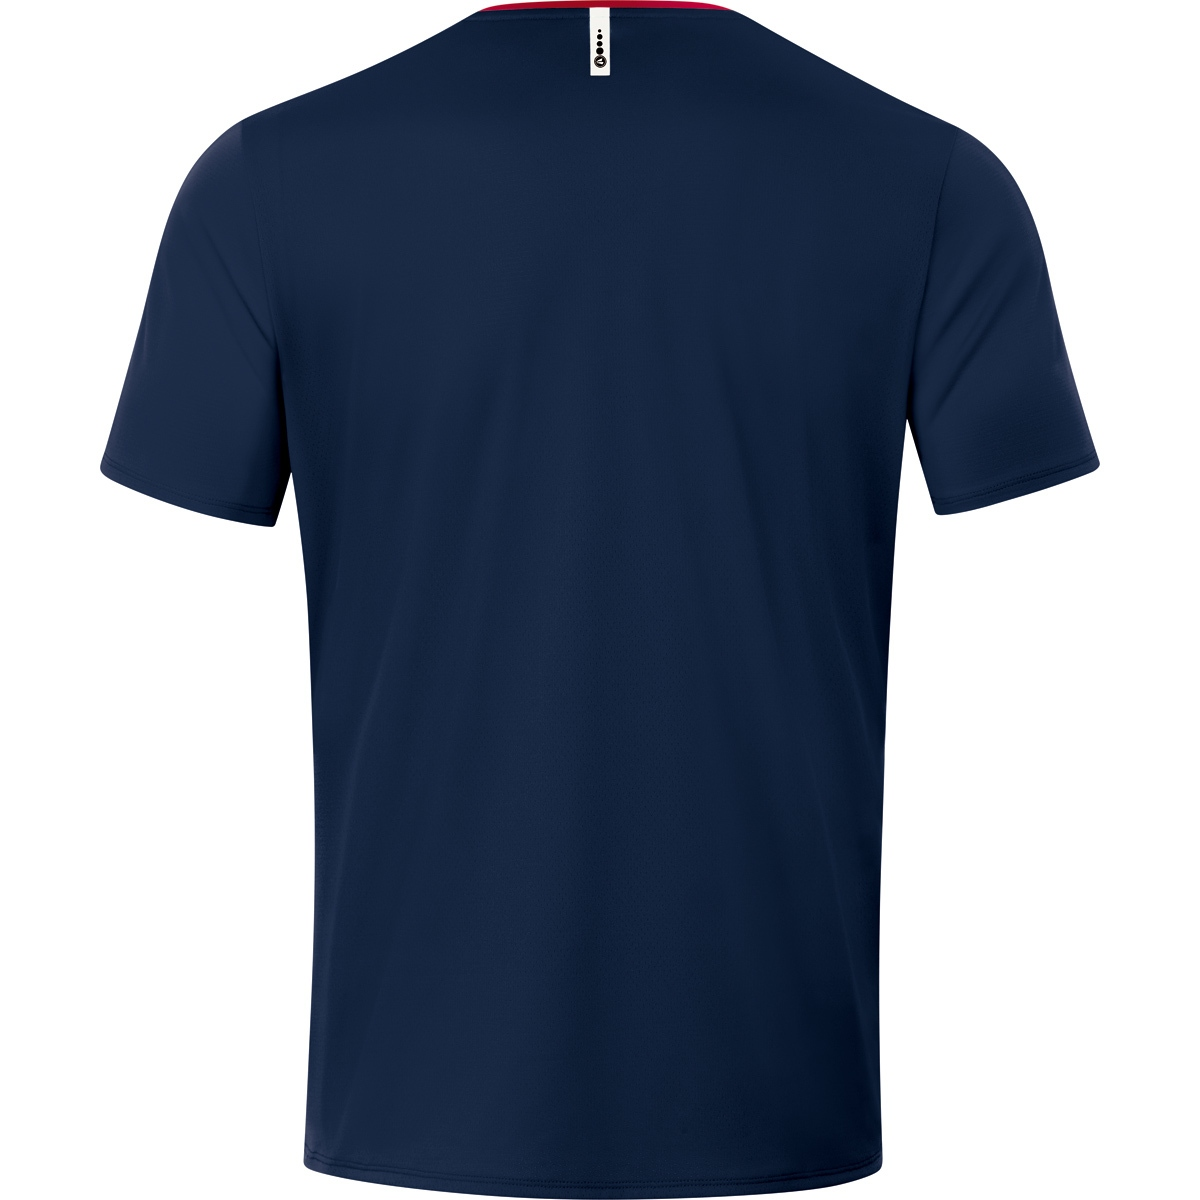 JAKO T-Shirt Champ 6120 128, marine/chili Gr. 2.0 rot, Kinder